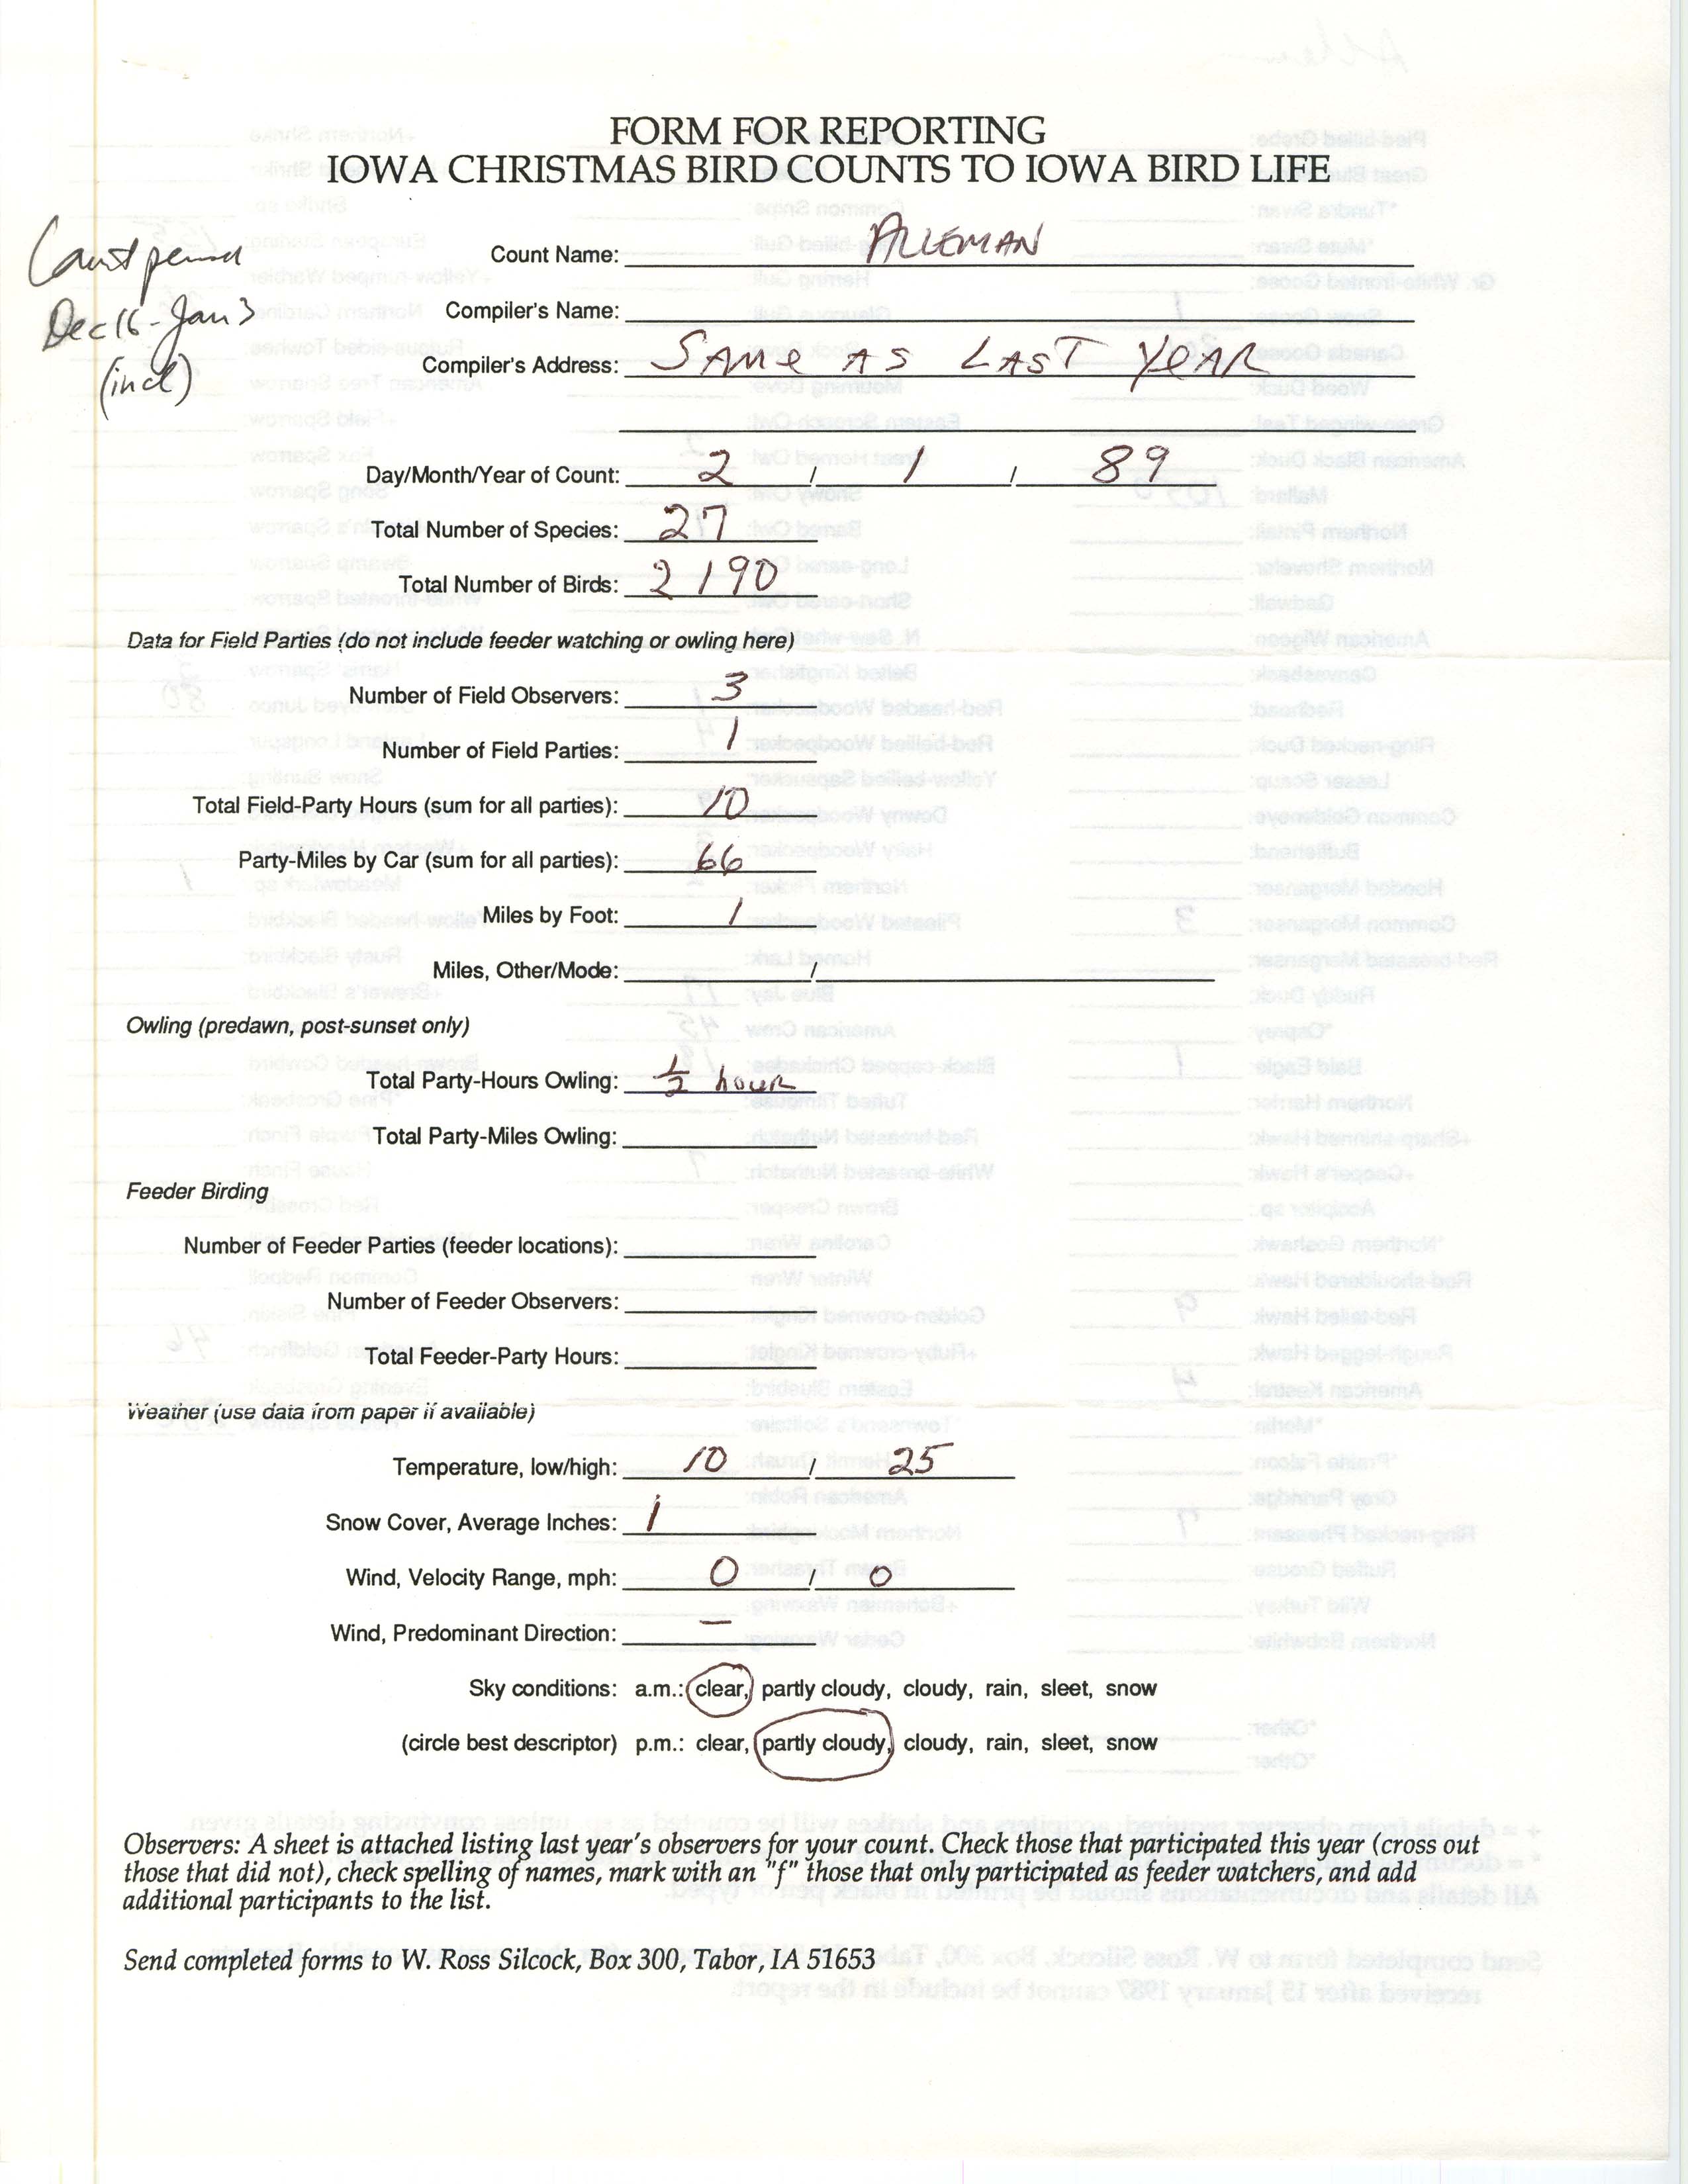 Form for reporting Iowa Christmas bird counts to Iowa Bird Life, Dean Mosman, January 2, 1989